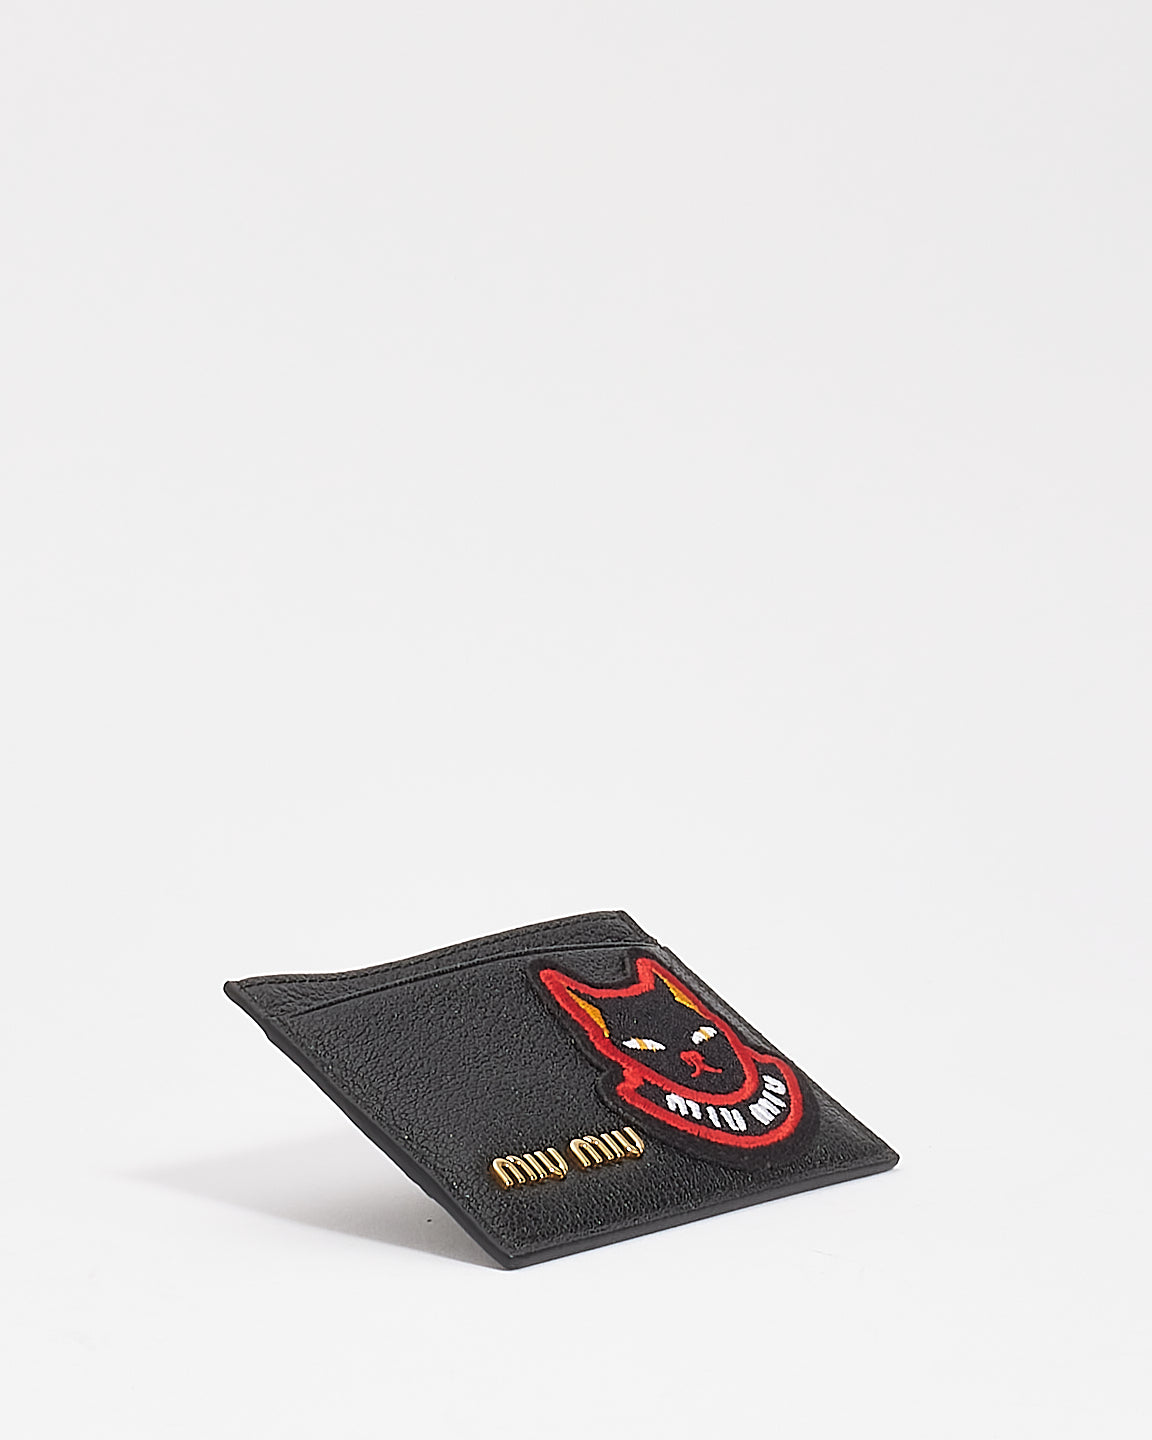 Porte-cartes Miu Miu en cuir noir avec patch chat